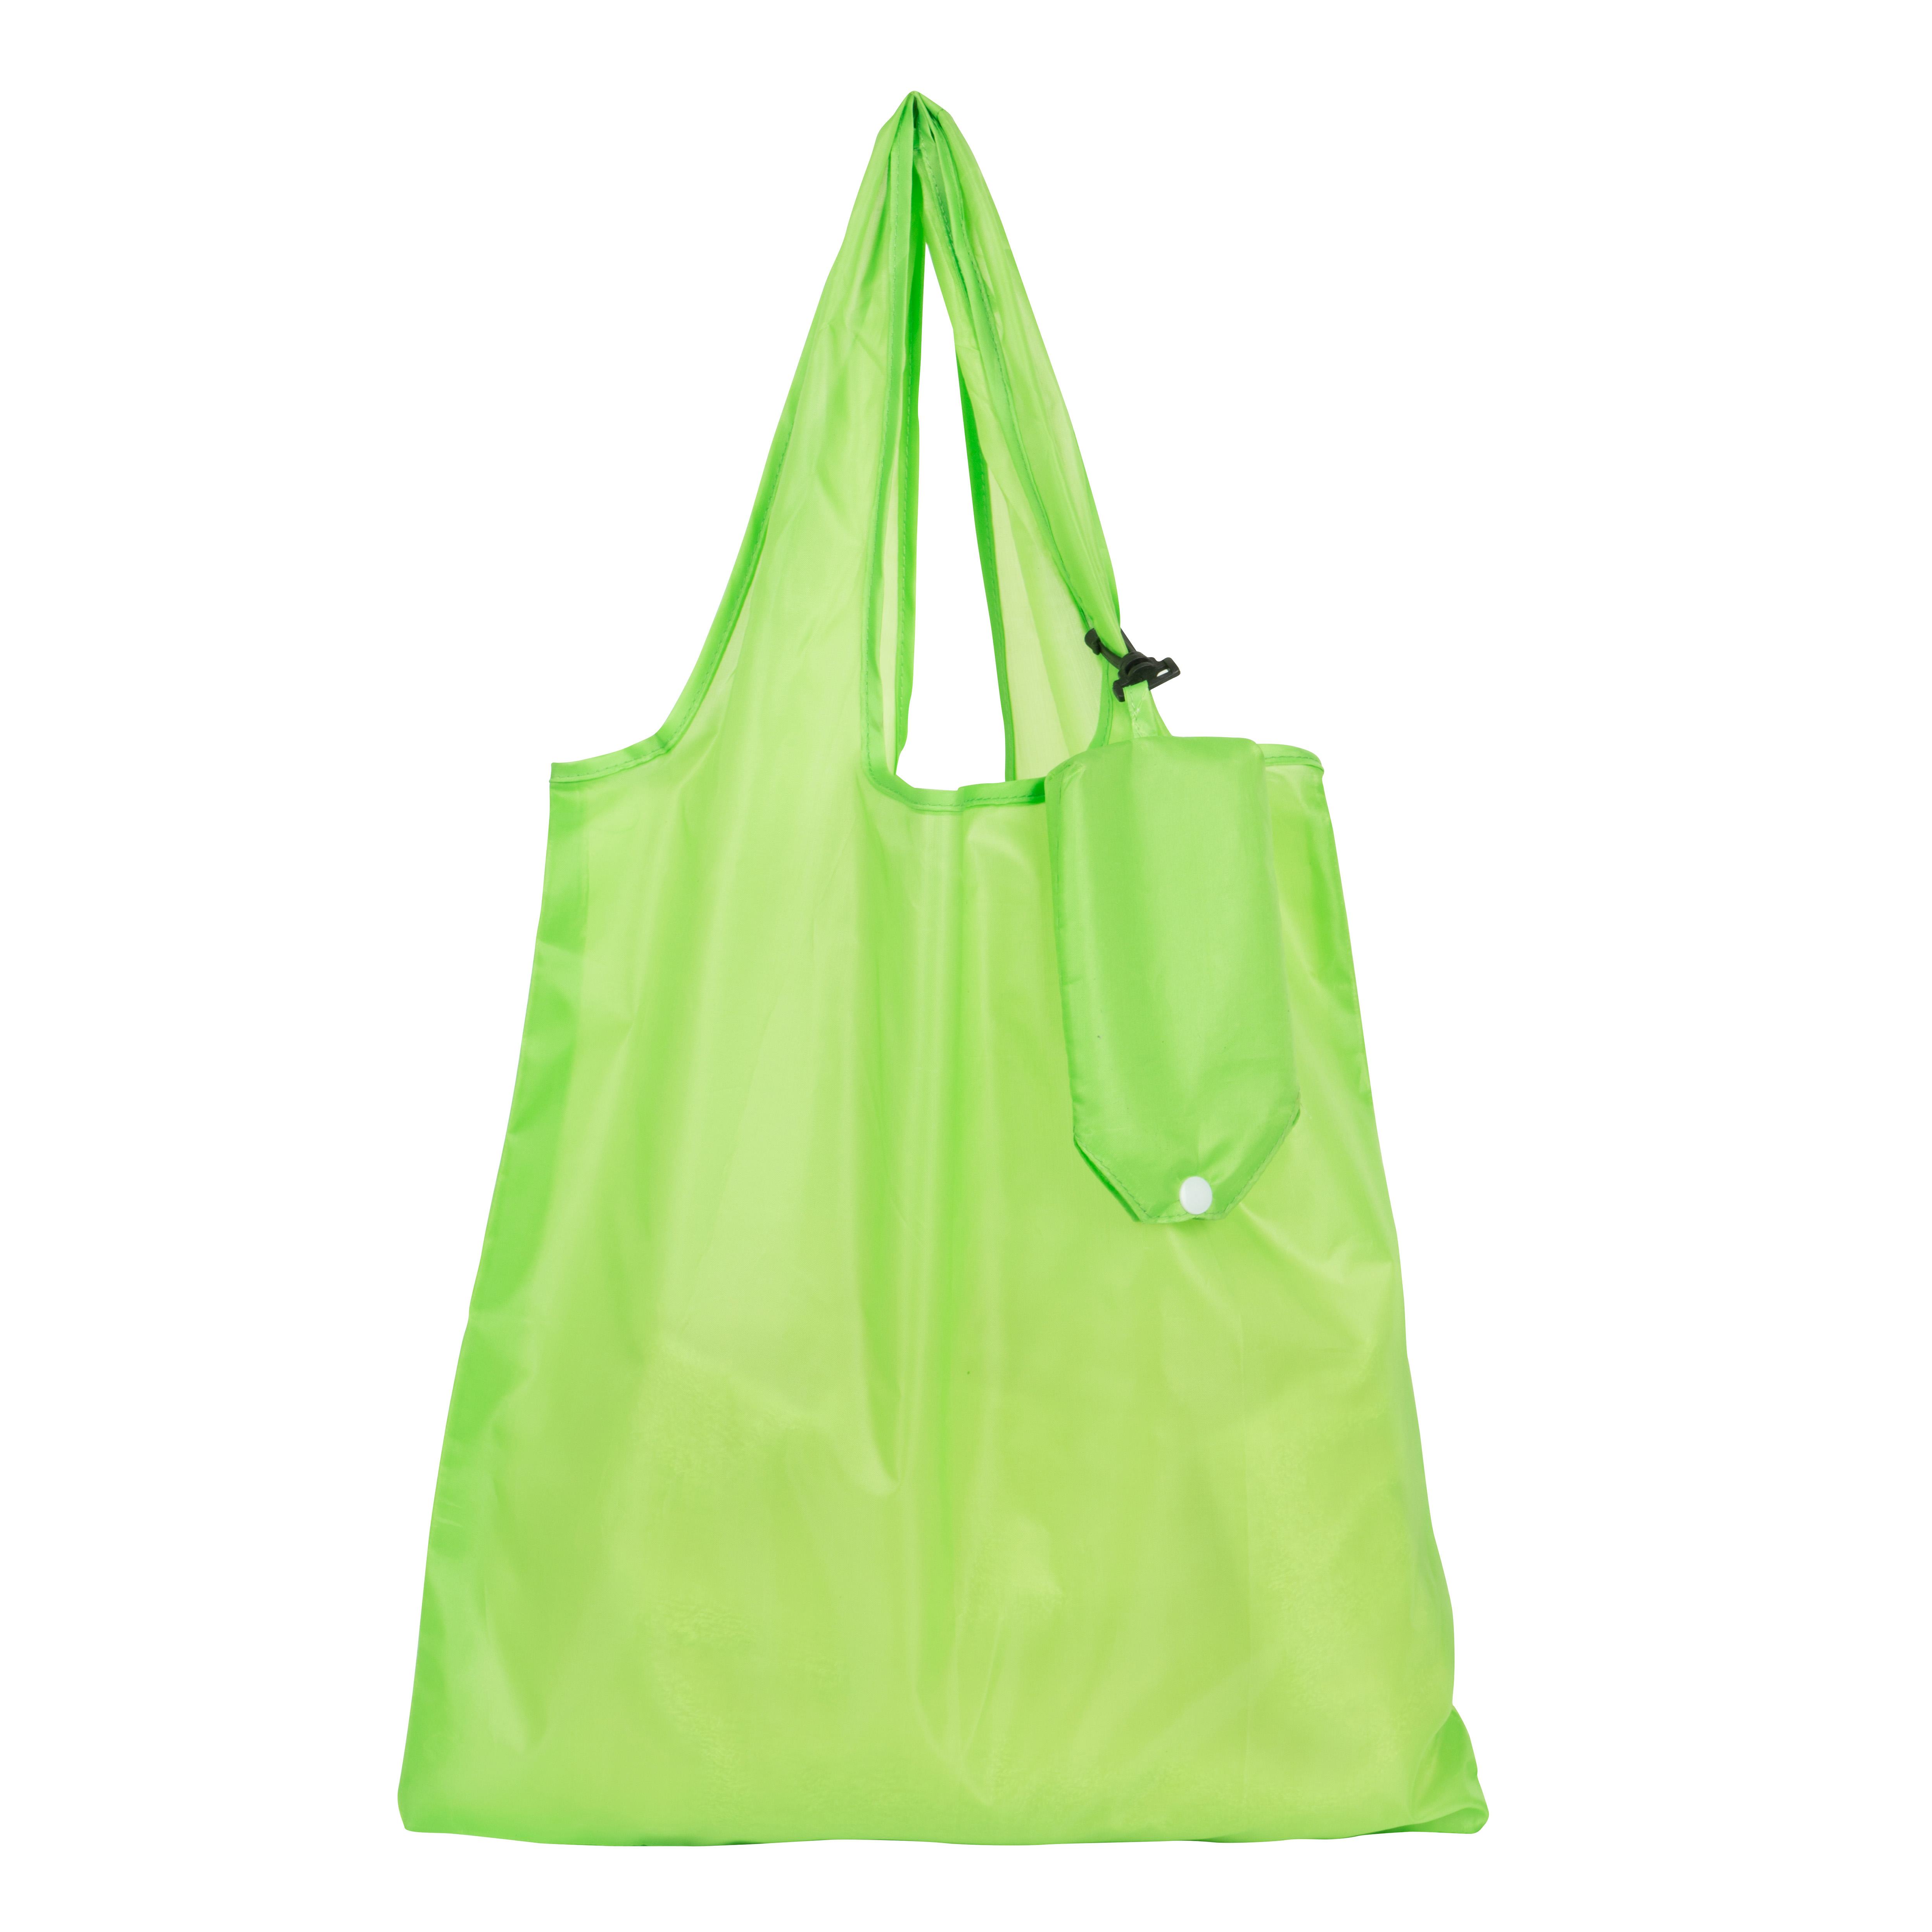 Foldable Shopping Bag B339 Green 1 